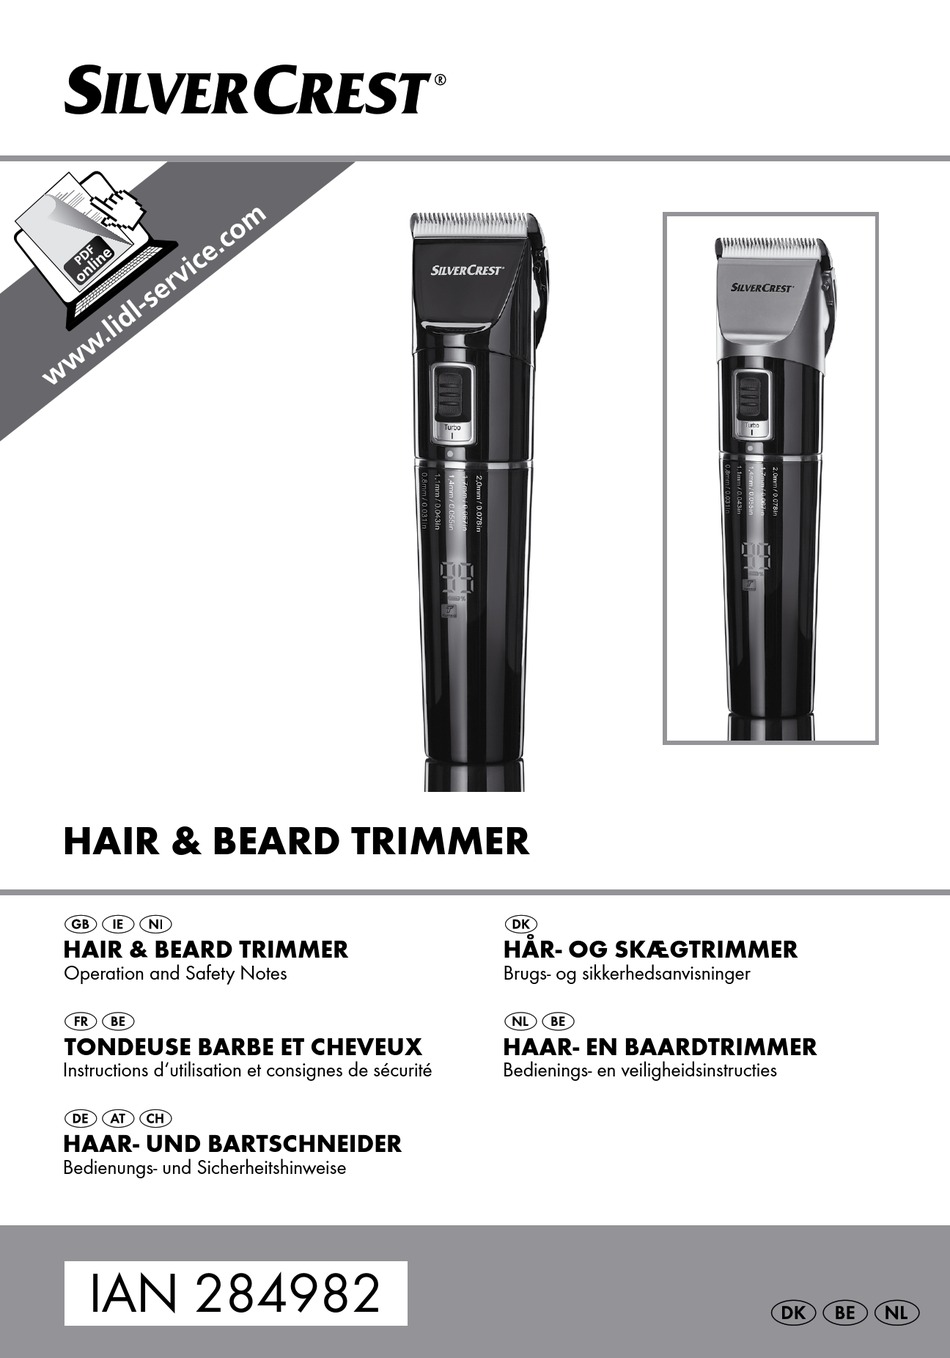 silvercrest cordless hair and beard trimmer